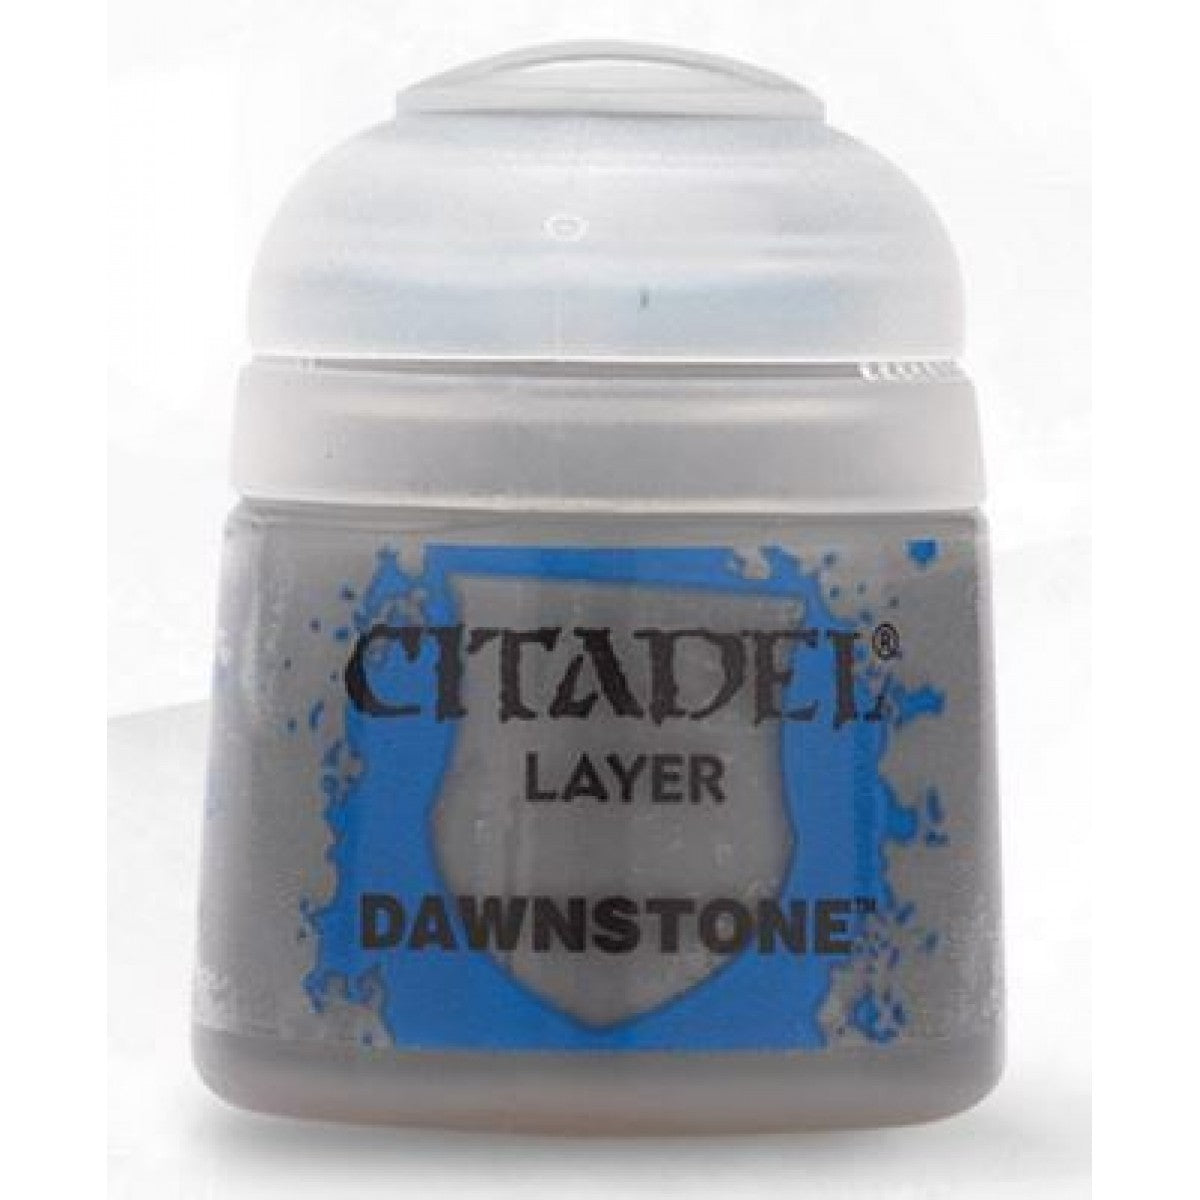 Citadel Layer Paint - Dawnstone 12ml (22-49)